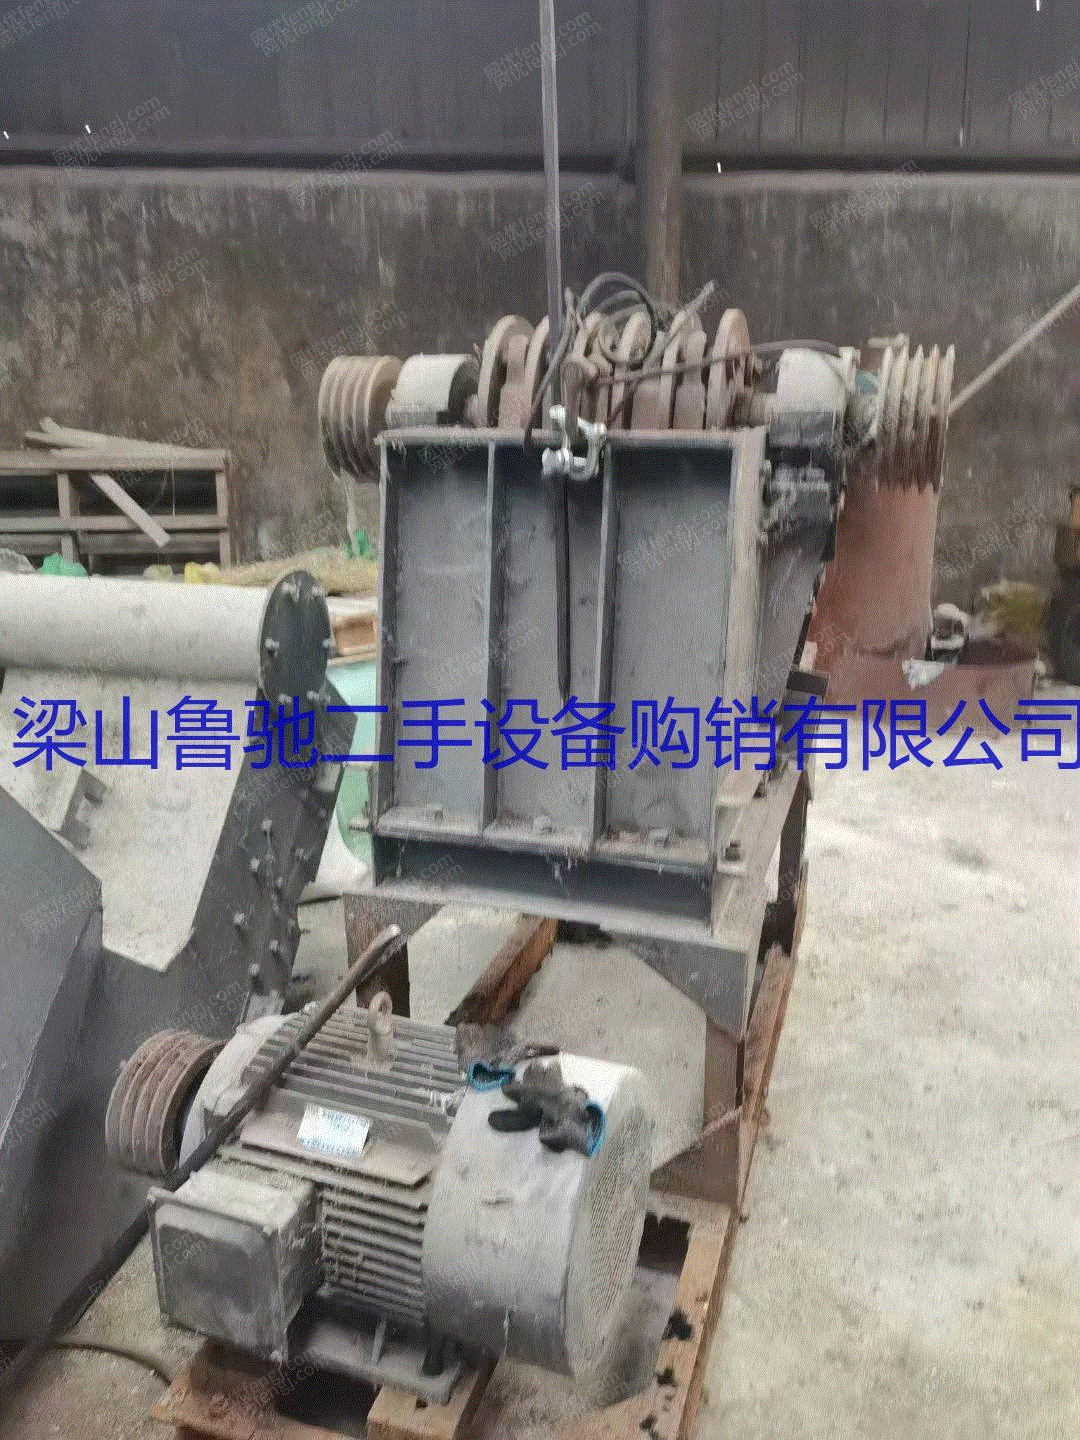 Sale scrap iron price treatment second-hand biomass crusher wood crusher